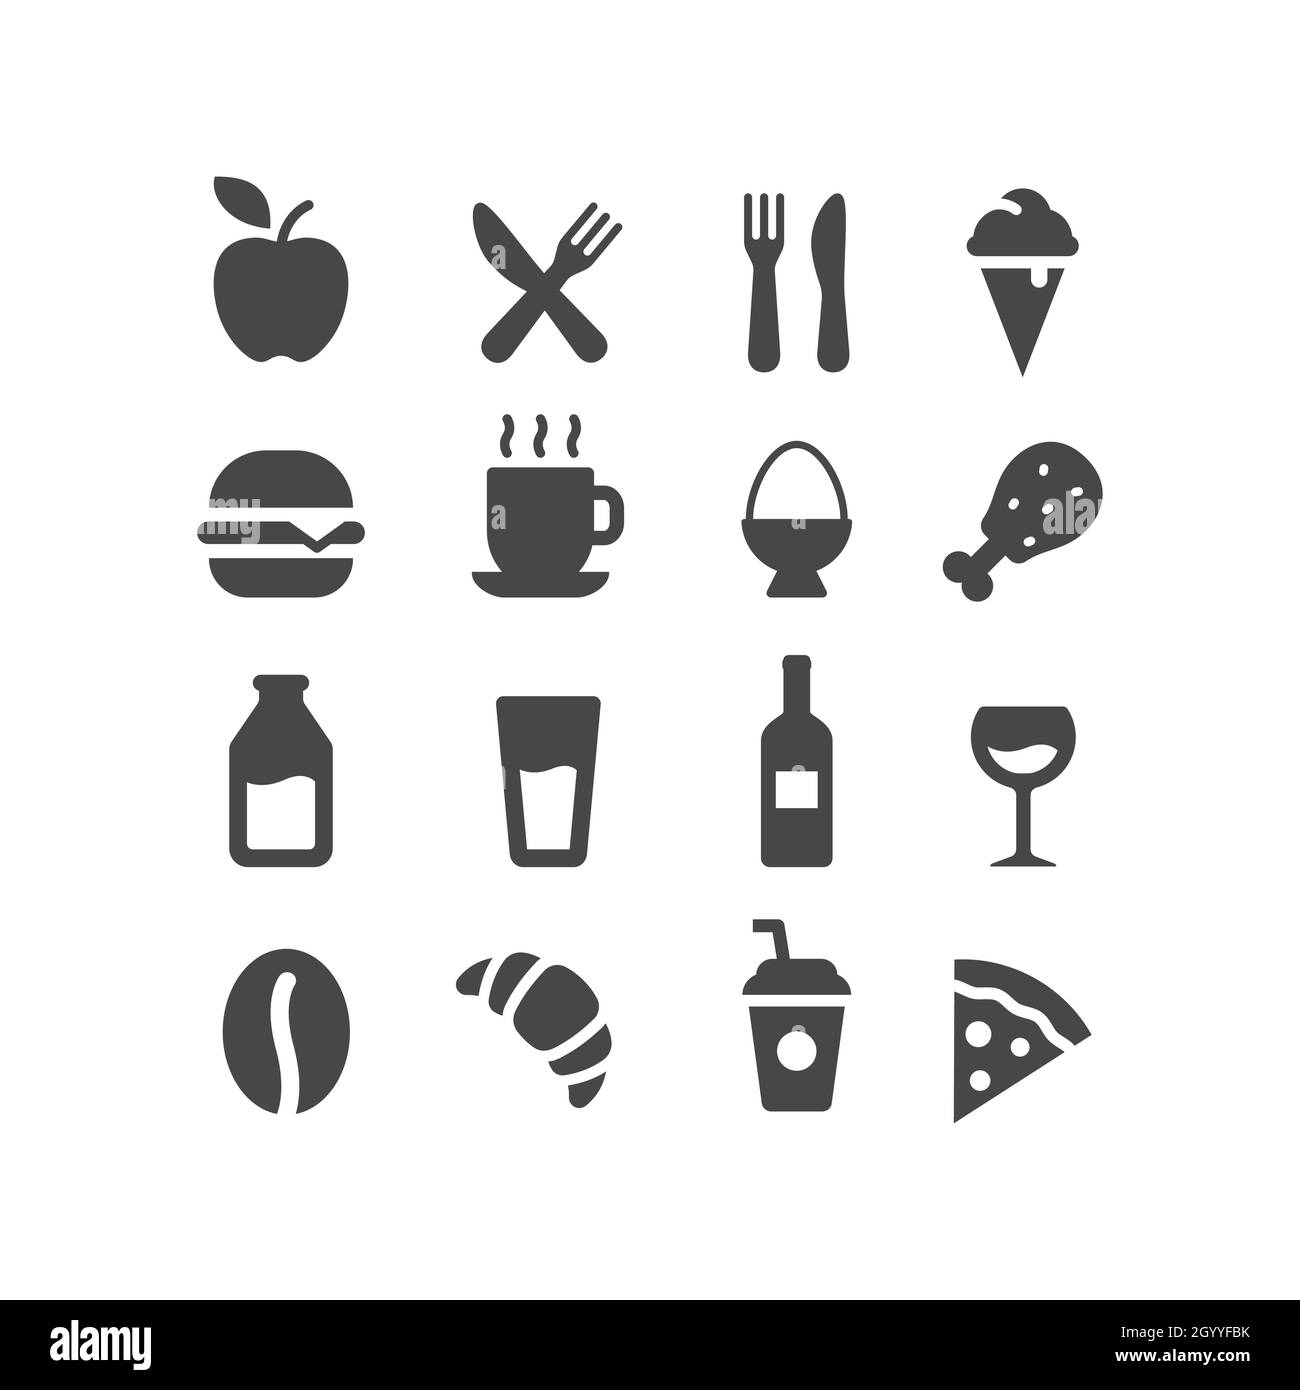 Basic food black vector icon set. Apple, egg, milk bottle symbols. Stock Vector